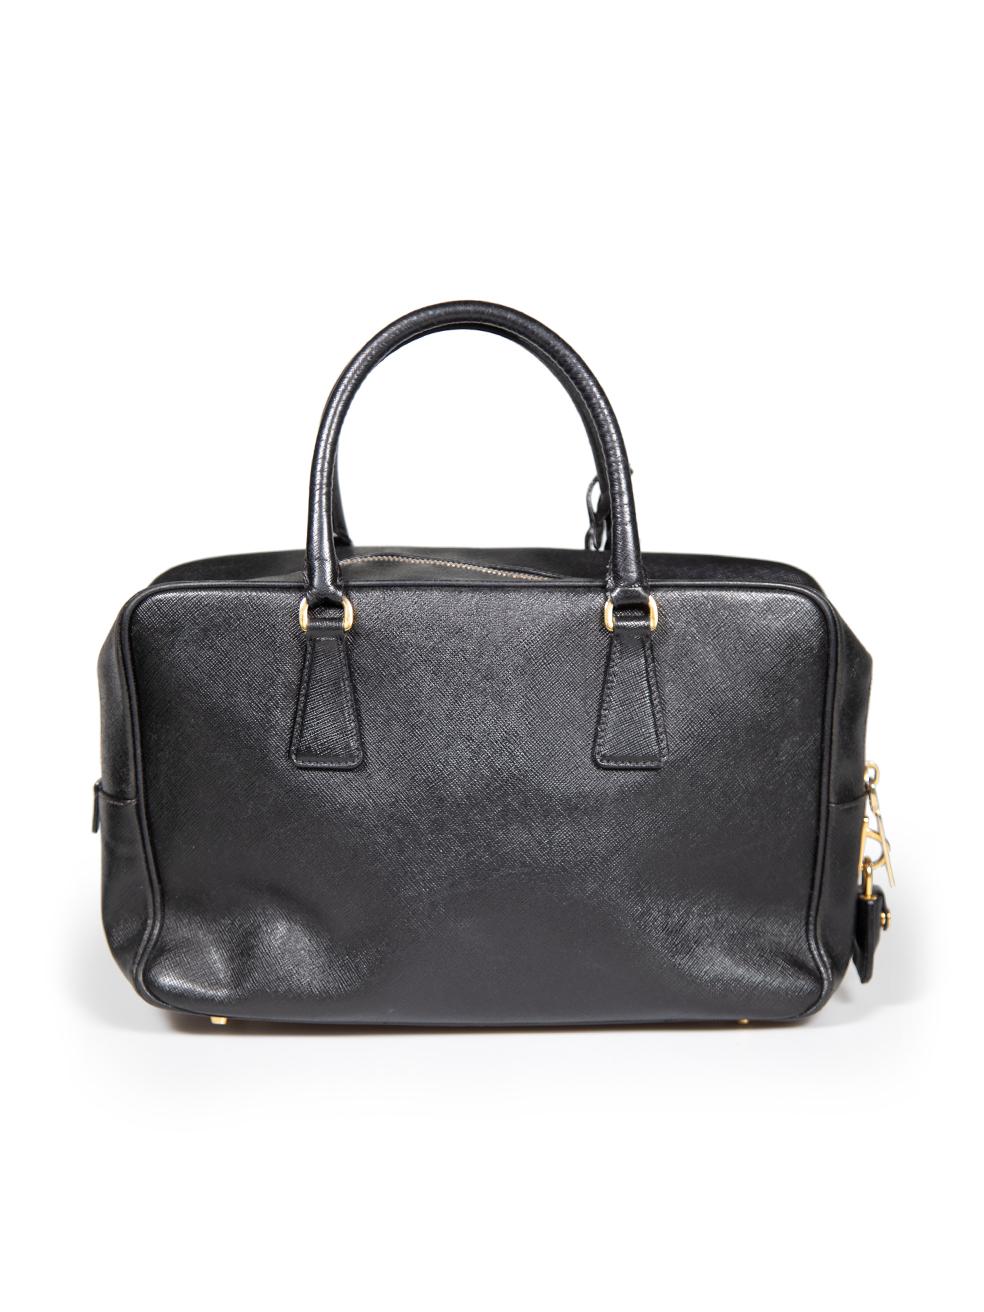 Prada Black Saffiano Leather Bauletto Bag In Good Condition For Sale In London, GB